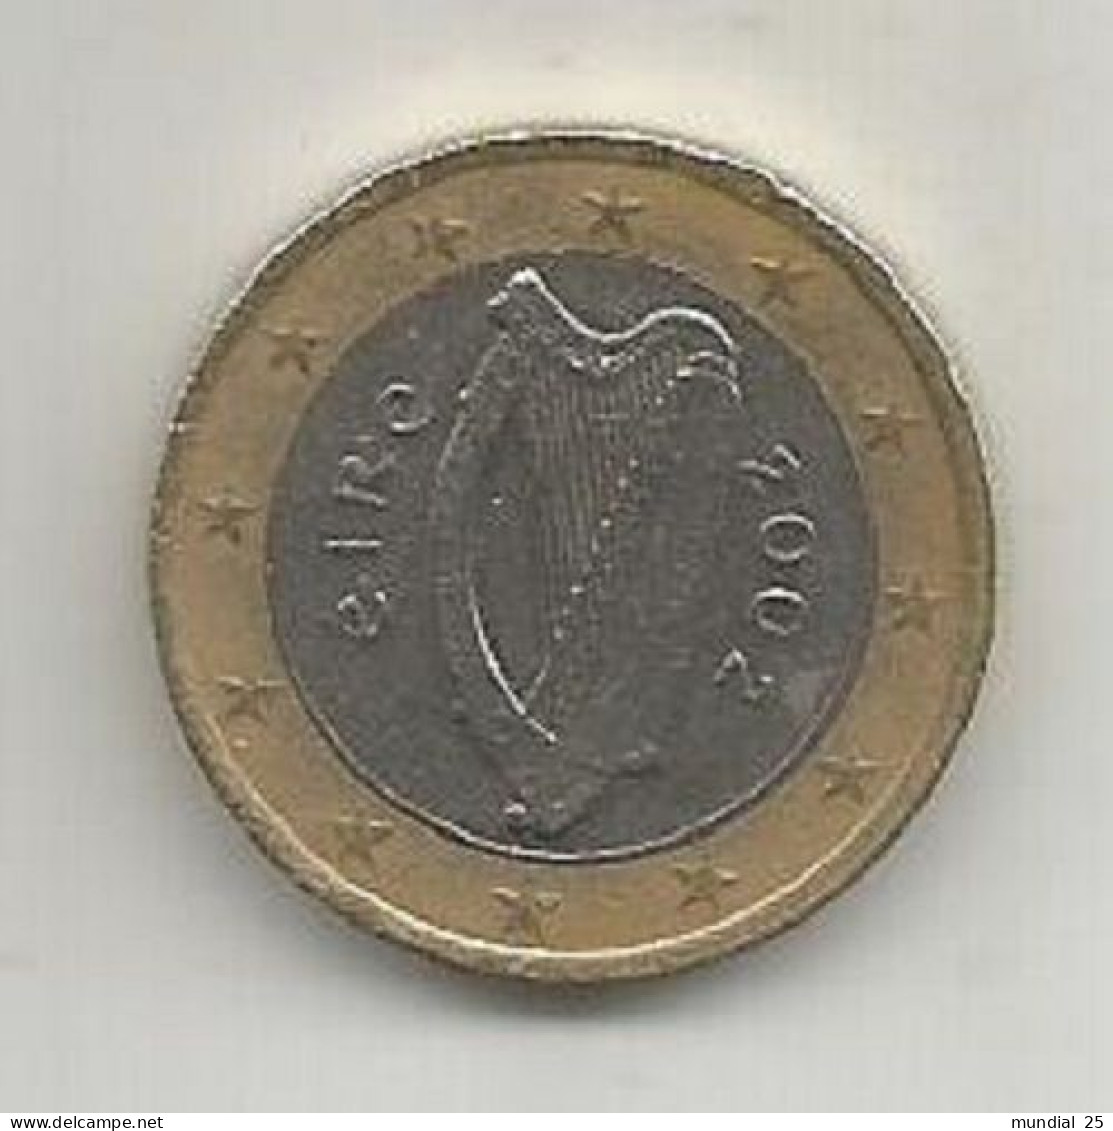 IRELAND 1 EURO 2002 - Ireland